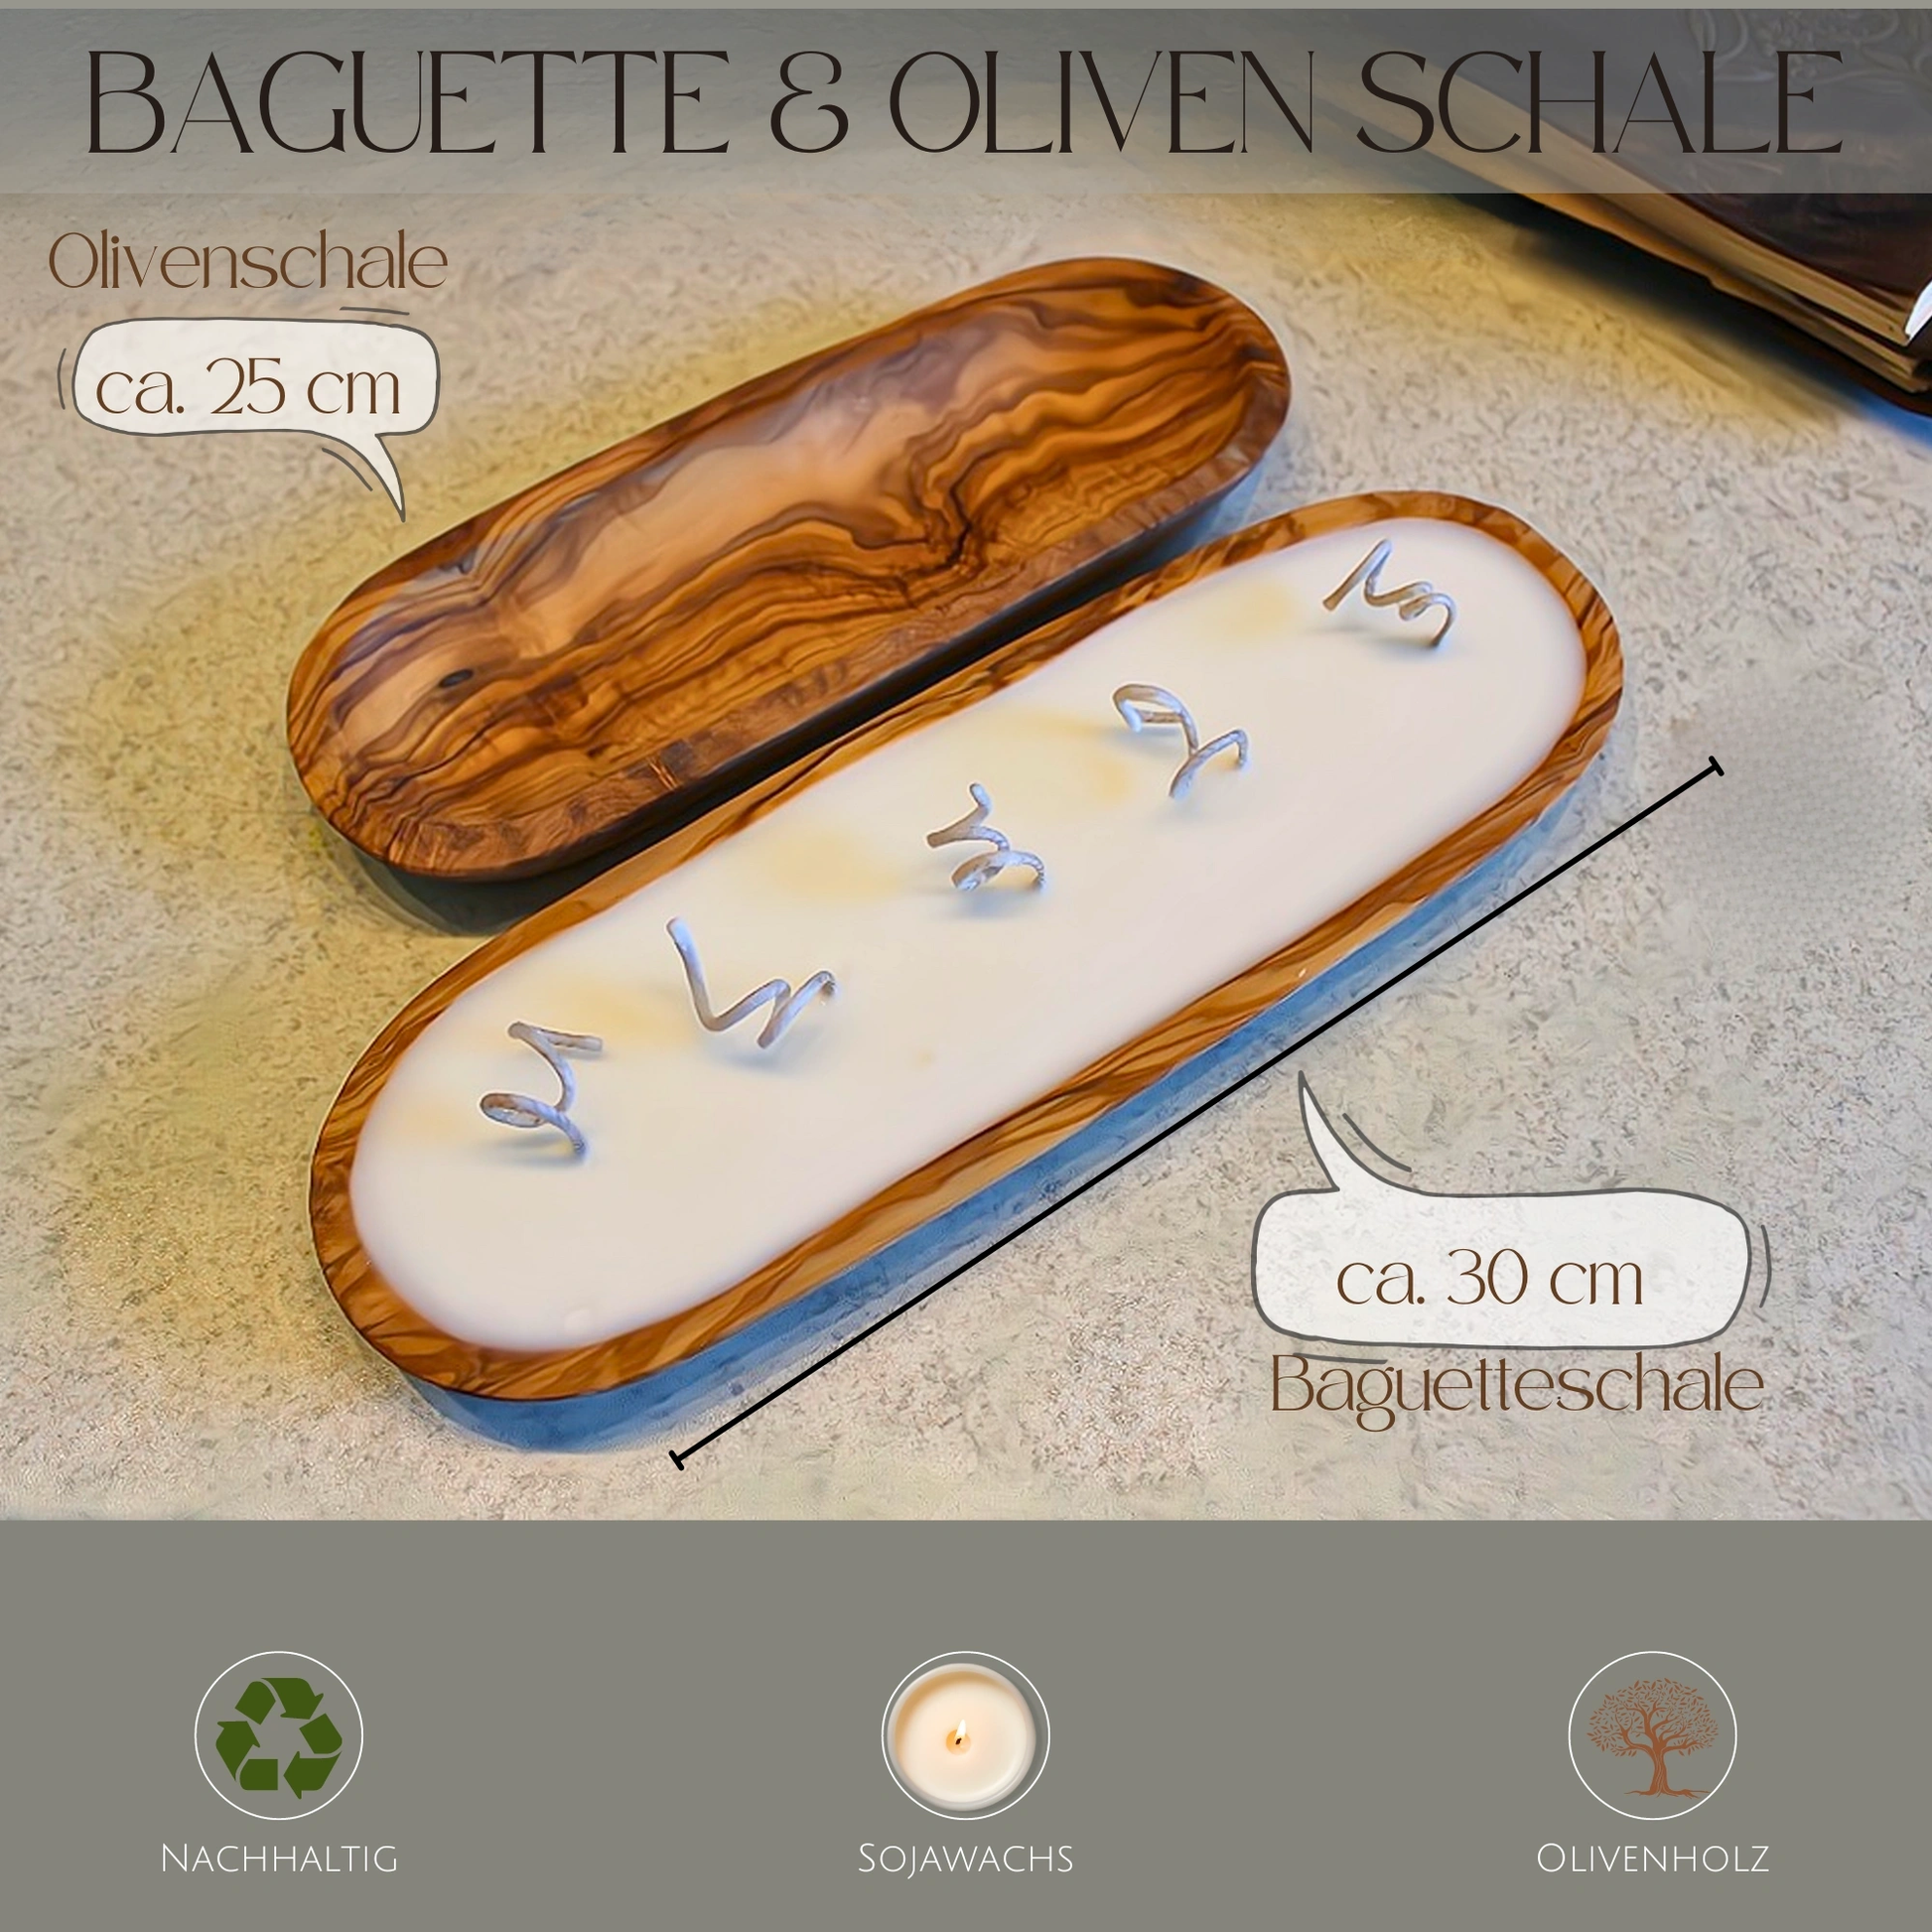 Sojawachskerze in Olivenholzschale "Baguette" 30 cm Süsse Kokosnuss